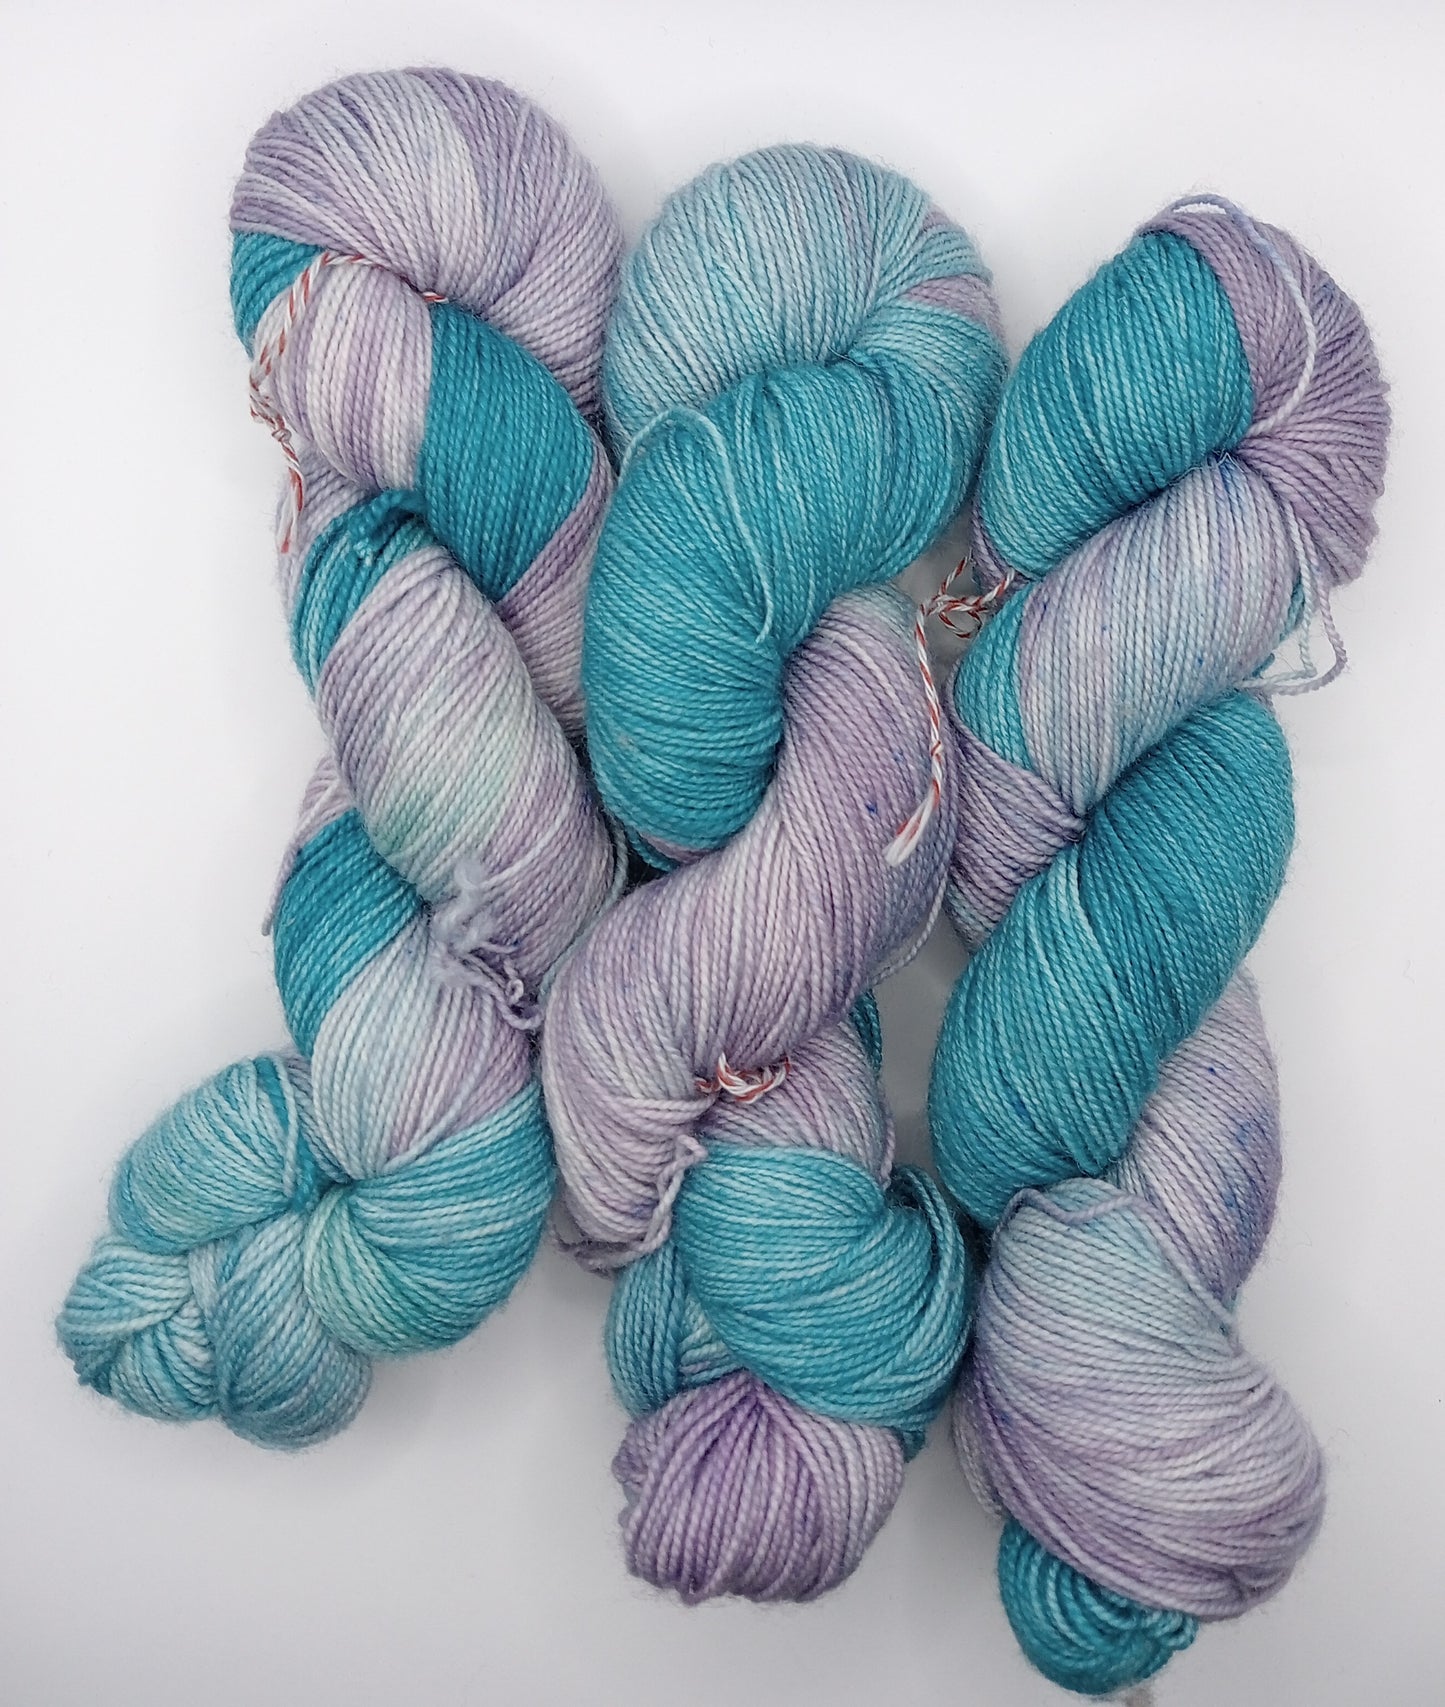 100G hand dyed Bluefaced Leicester/Nylon High Twist sock yarn - "Aurora Reef"